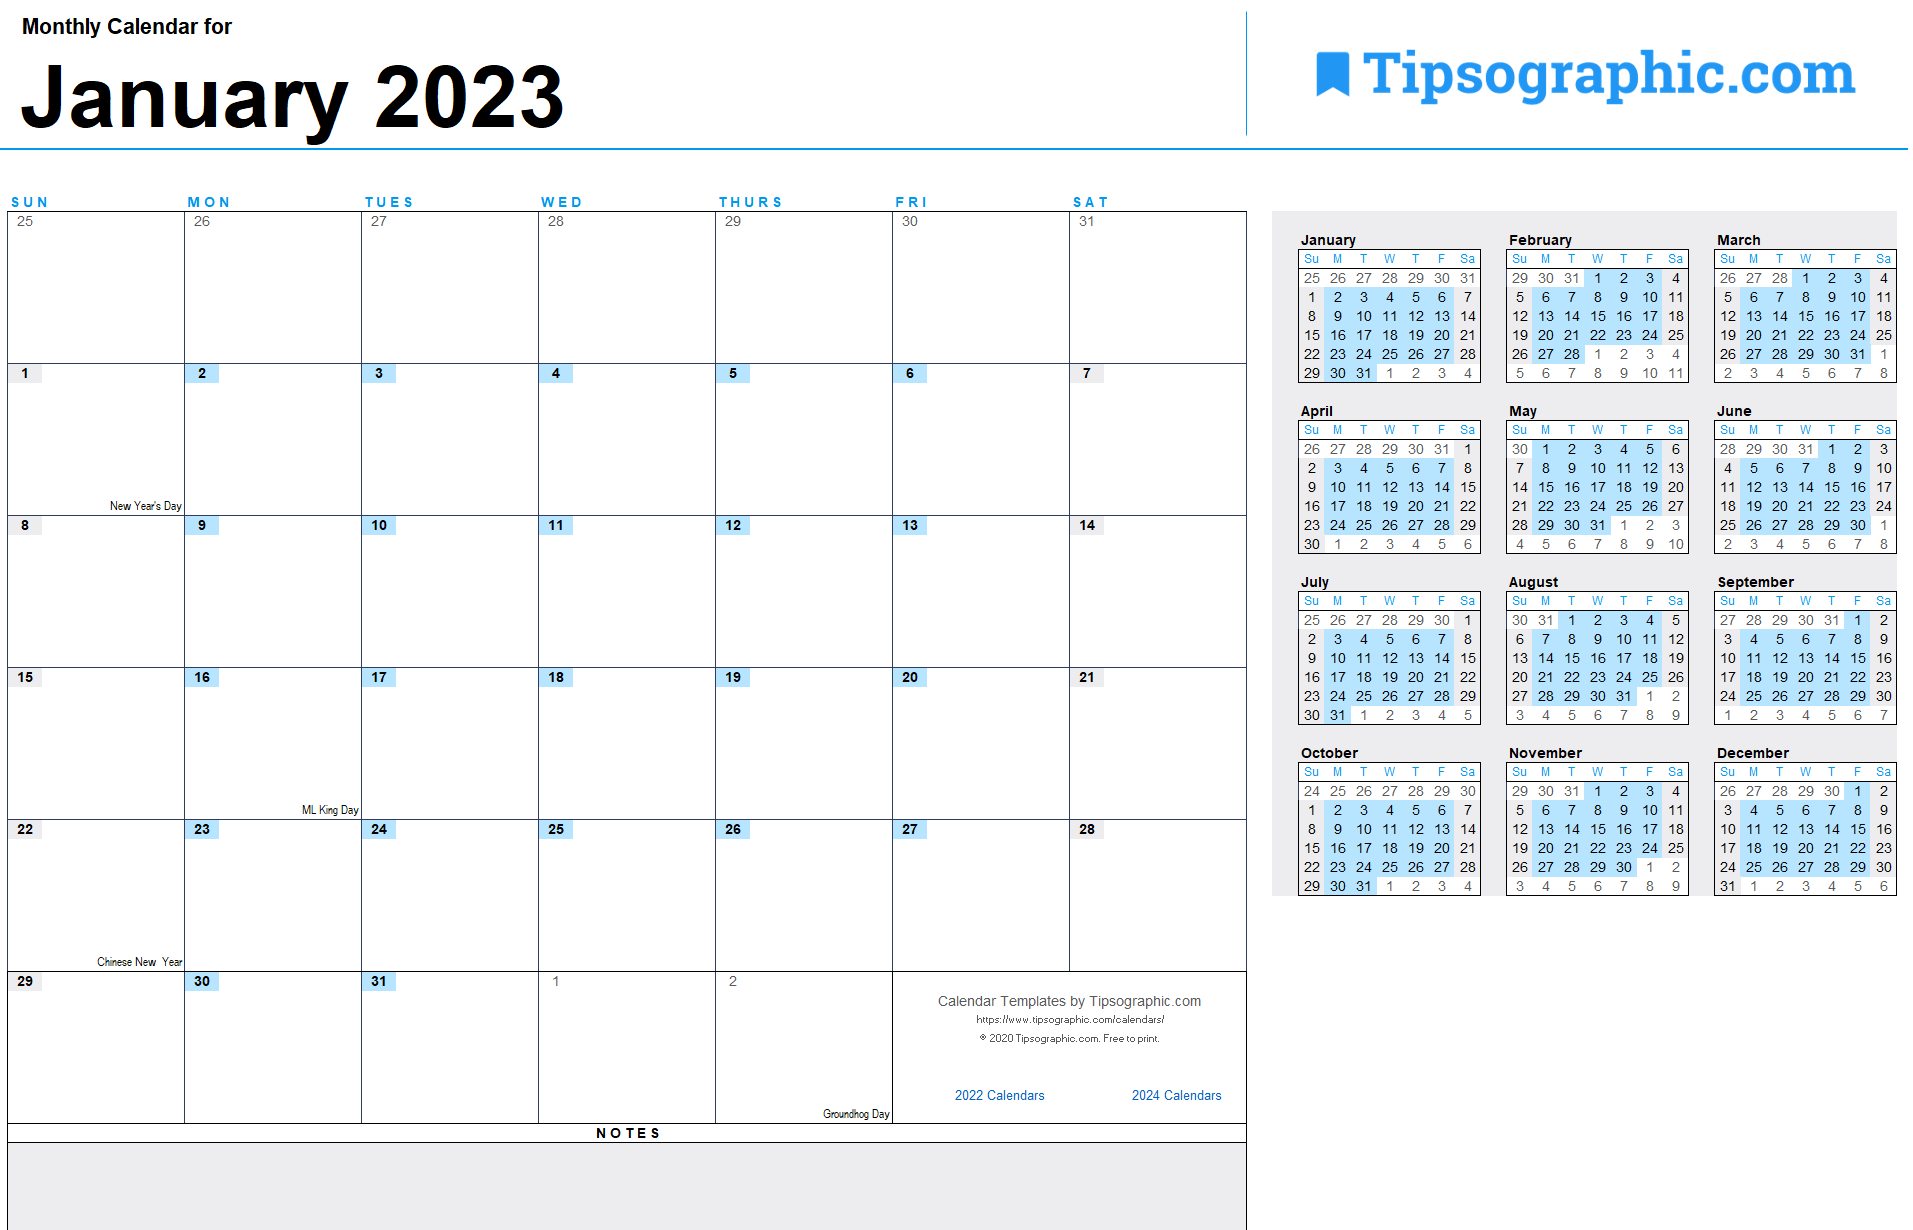 Monthly Calendar Template 2023 - 2023